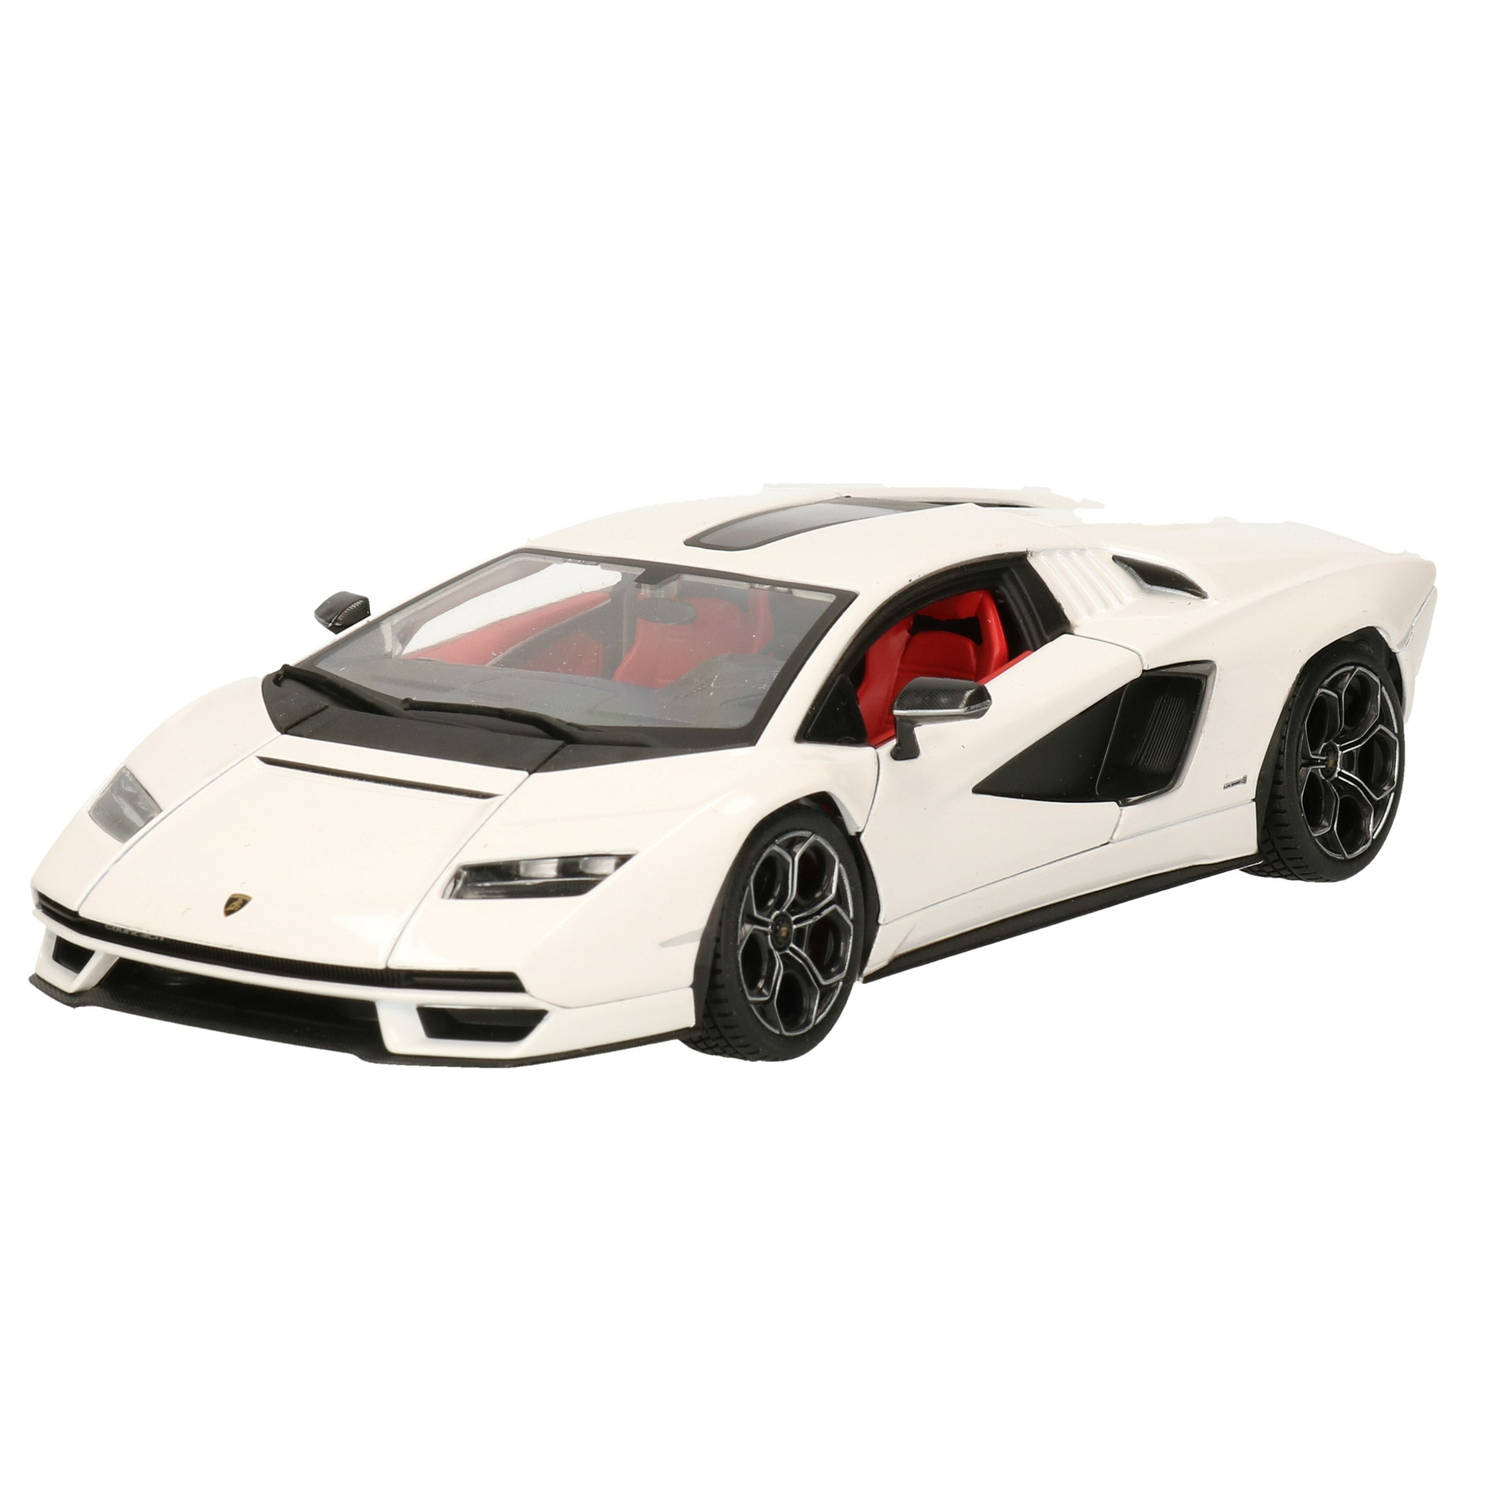 Modelauto/speelgoedauto Lamborghini Countach schaal 1:24/20 8 x 5 cm - Speelgoed auto's | Blokker